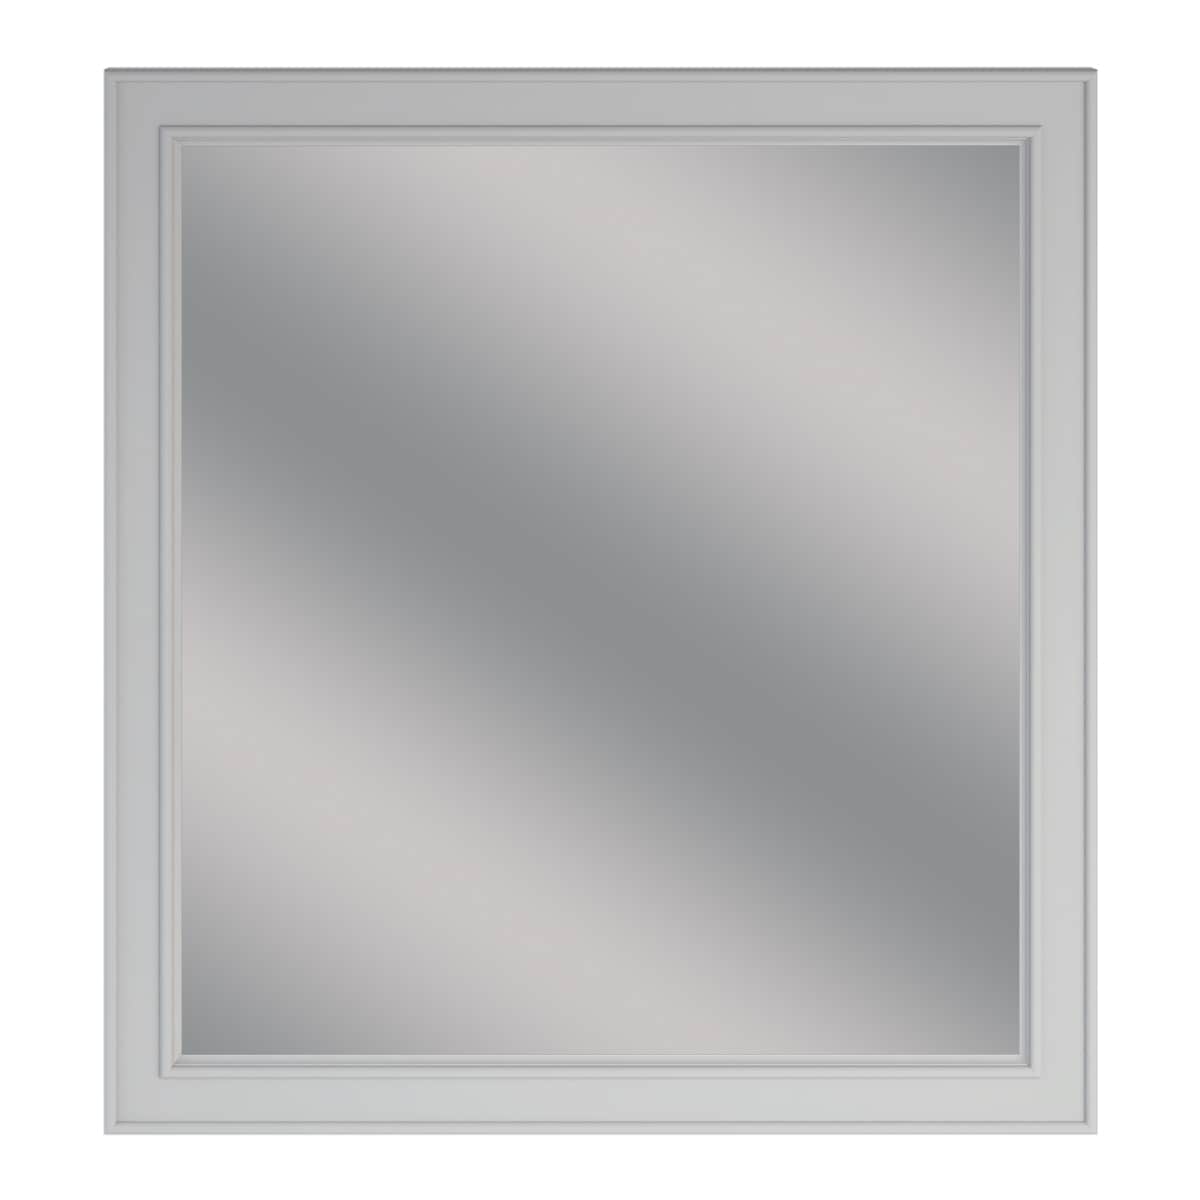 Wrightsville 28-in x 30-in Light Gray Rectangular Framed Bathroom Vanity Mirror | - allen + roth 1116MR-28-242